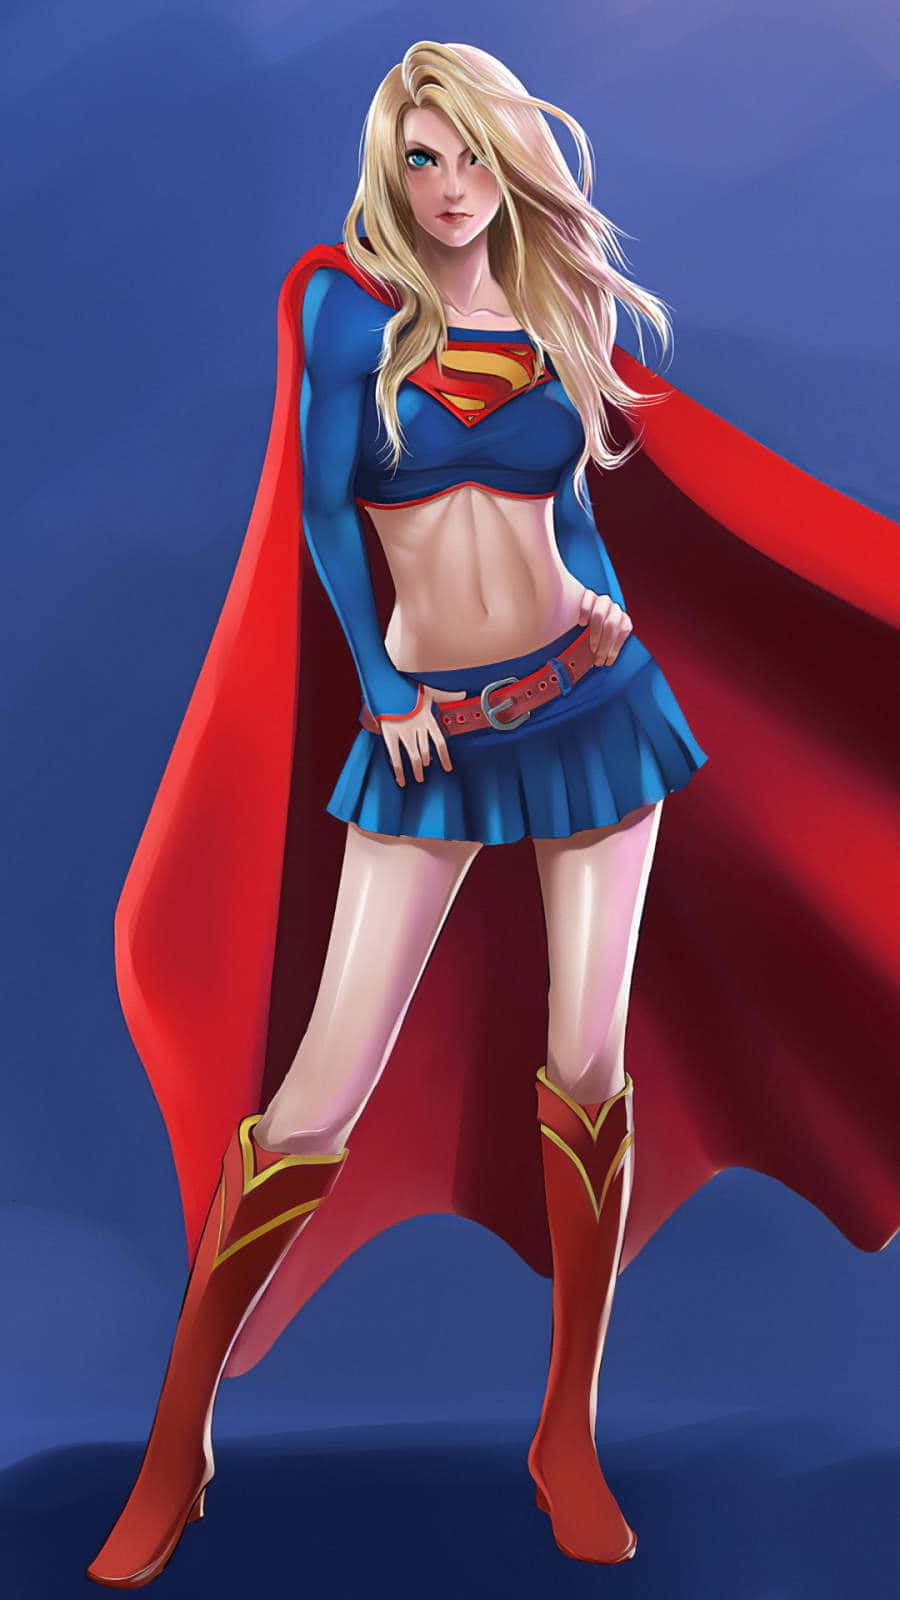 Naughty Girl Wearing Superman Attire